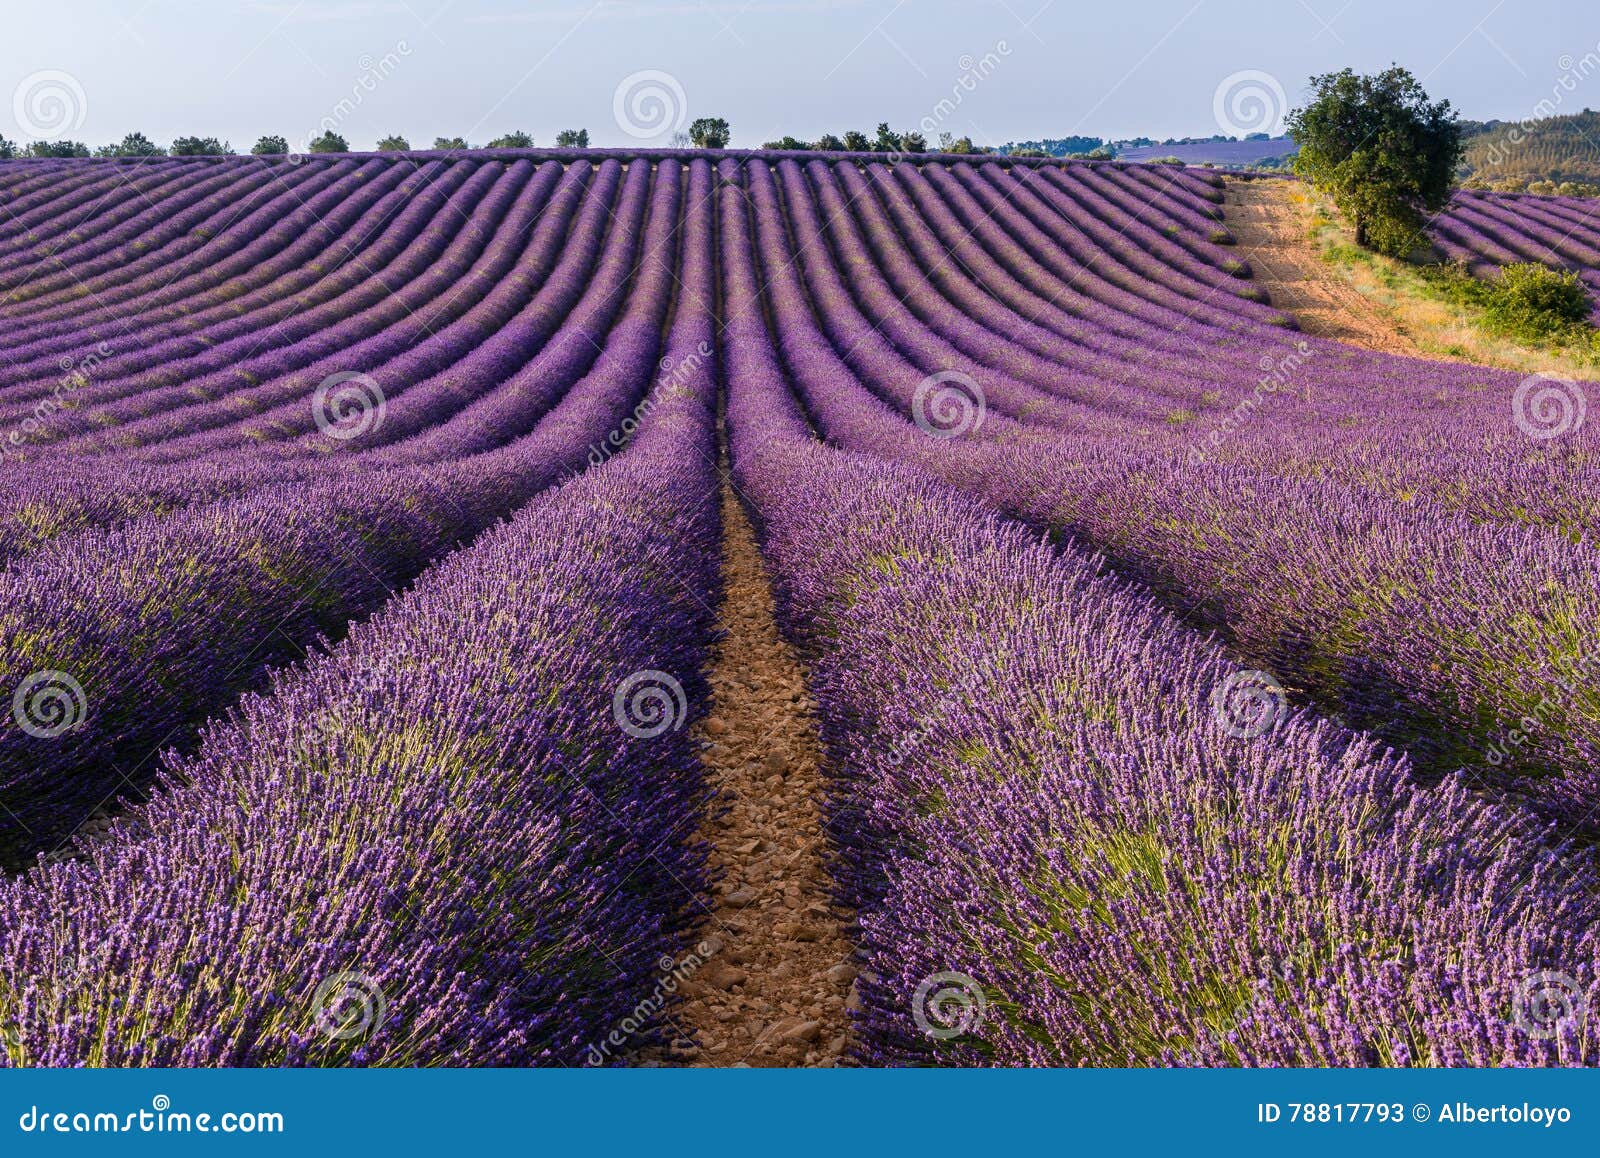 lavender field in valensole plateau, provence